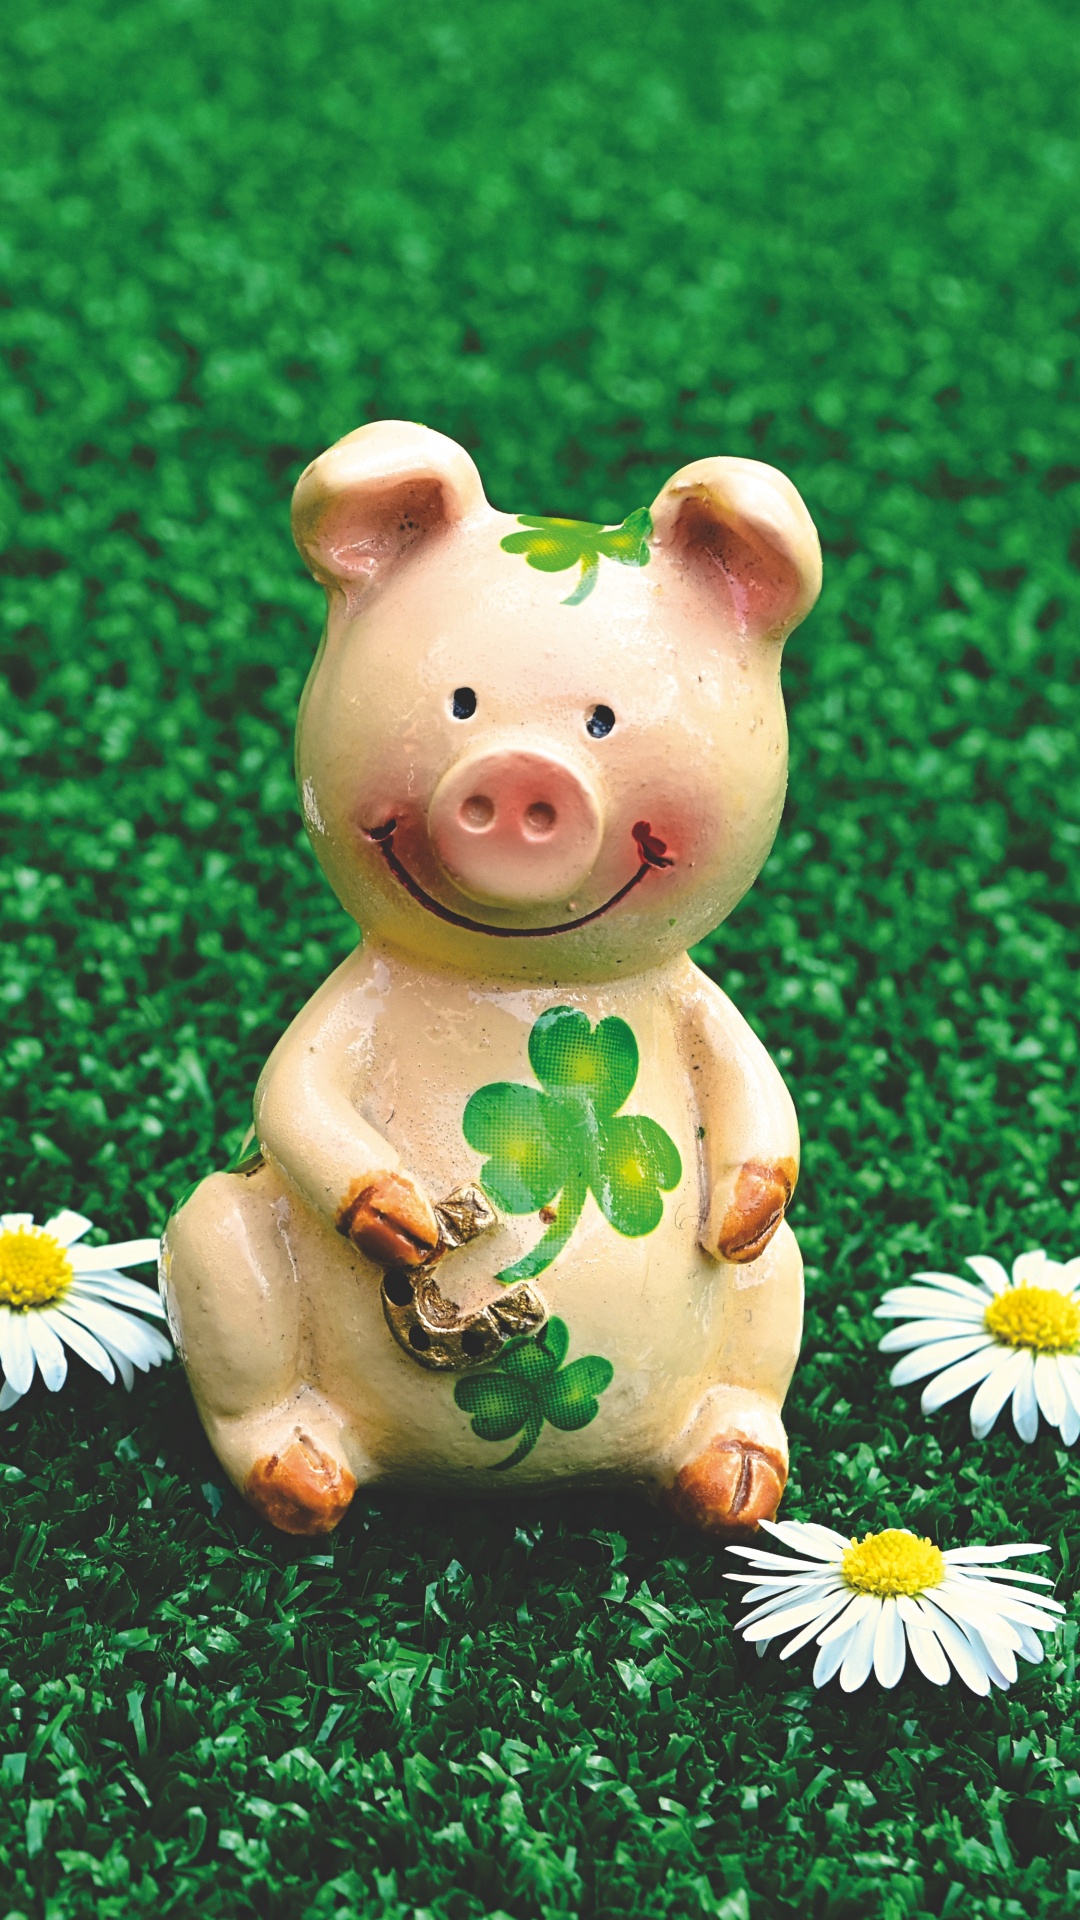 Pink Pig Ceramic Figurine on Green Grass Field. Wallpaper in 1080x1920 Resolution